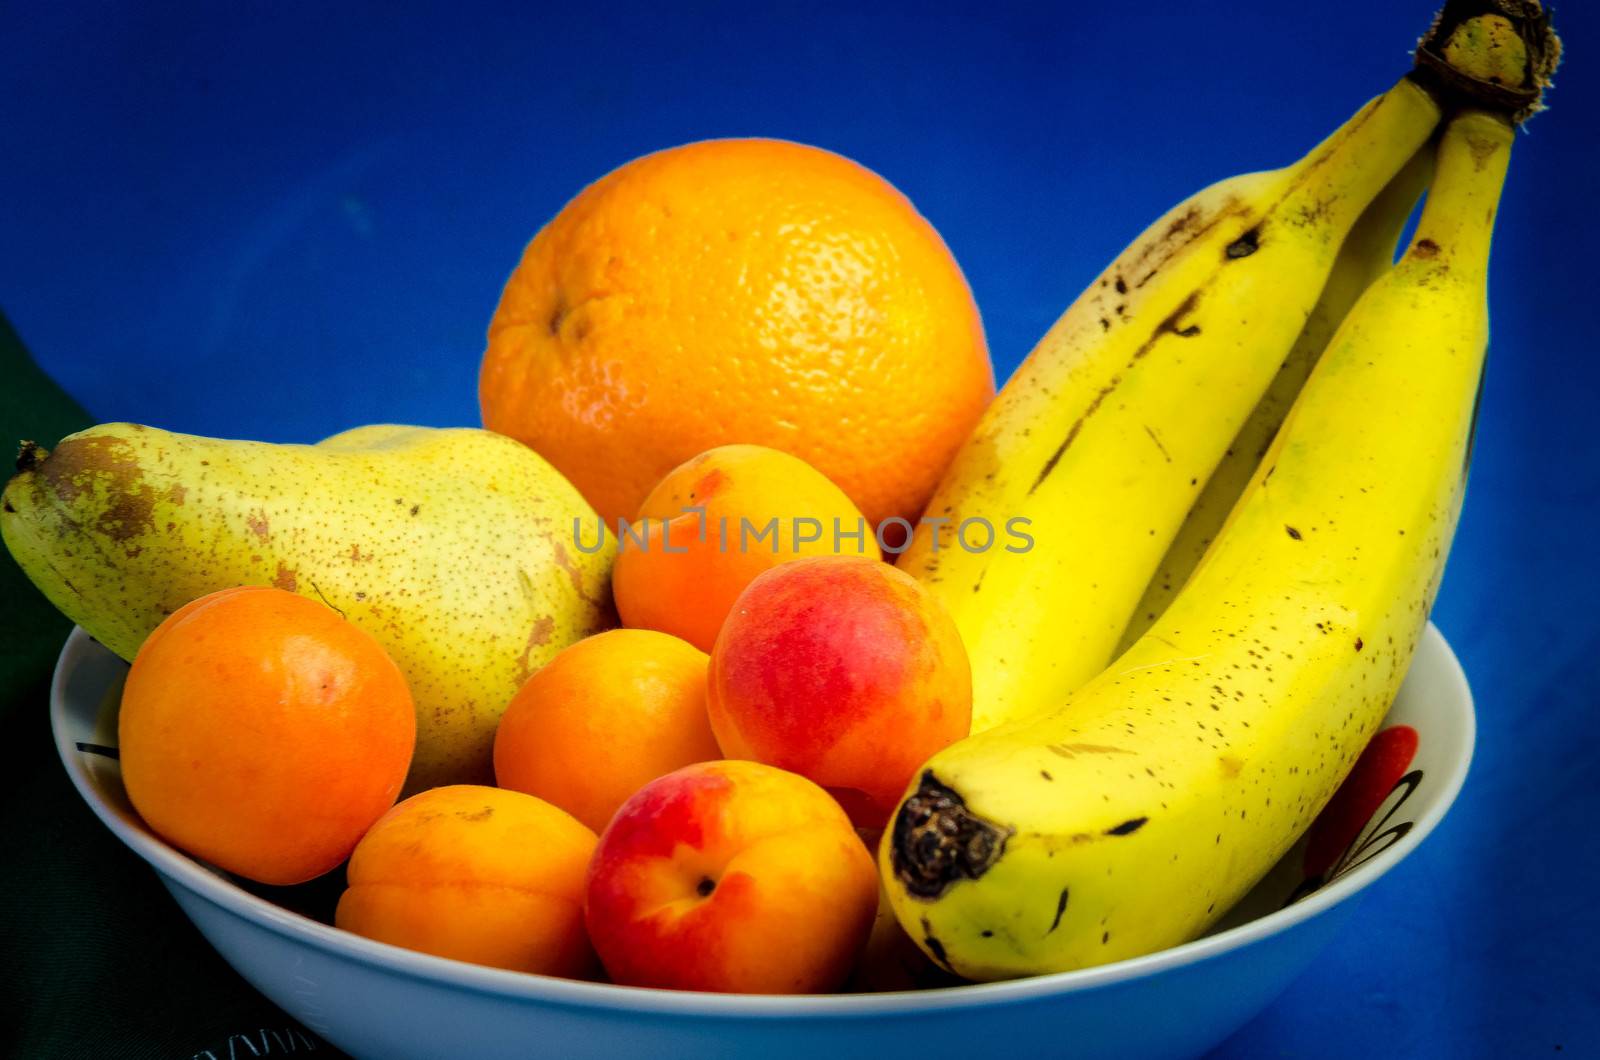 summer fruit bowl by bpardofotografia